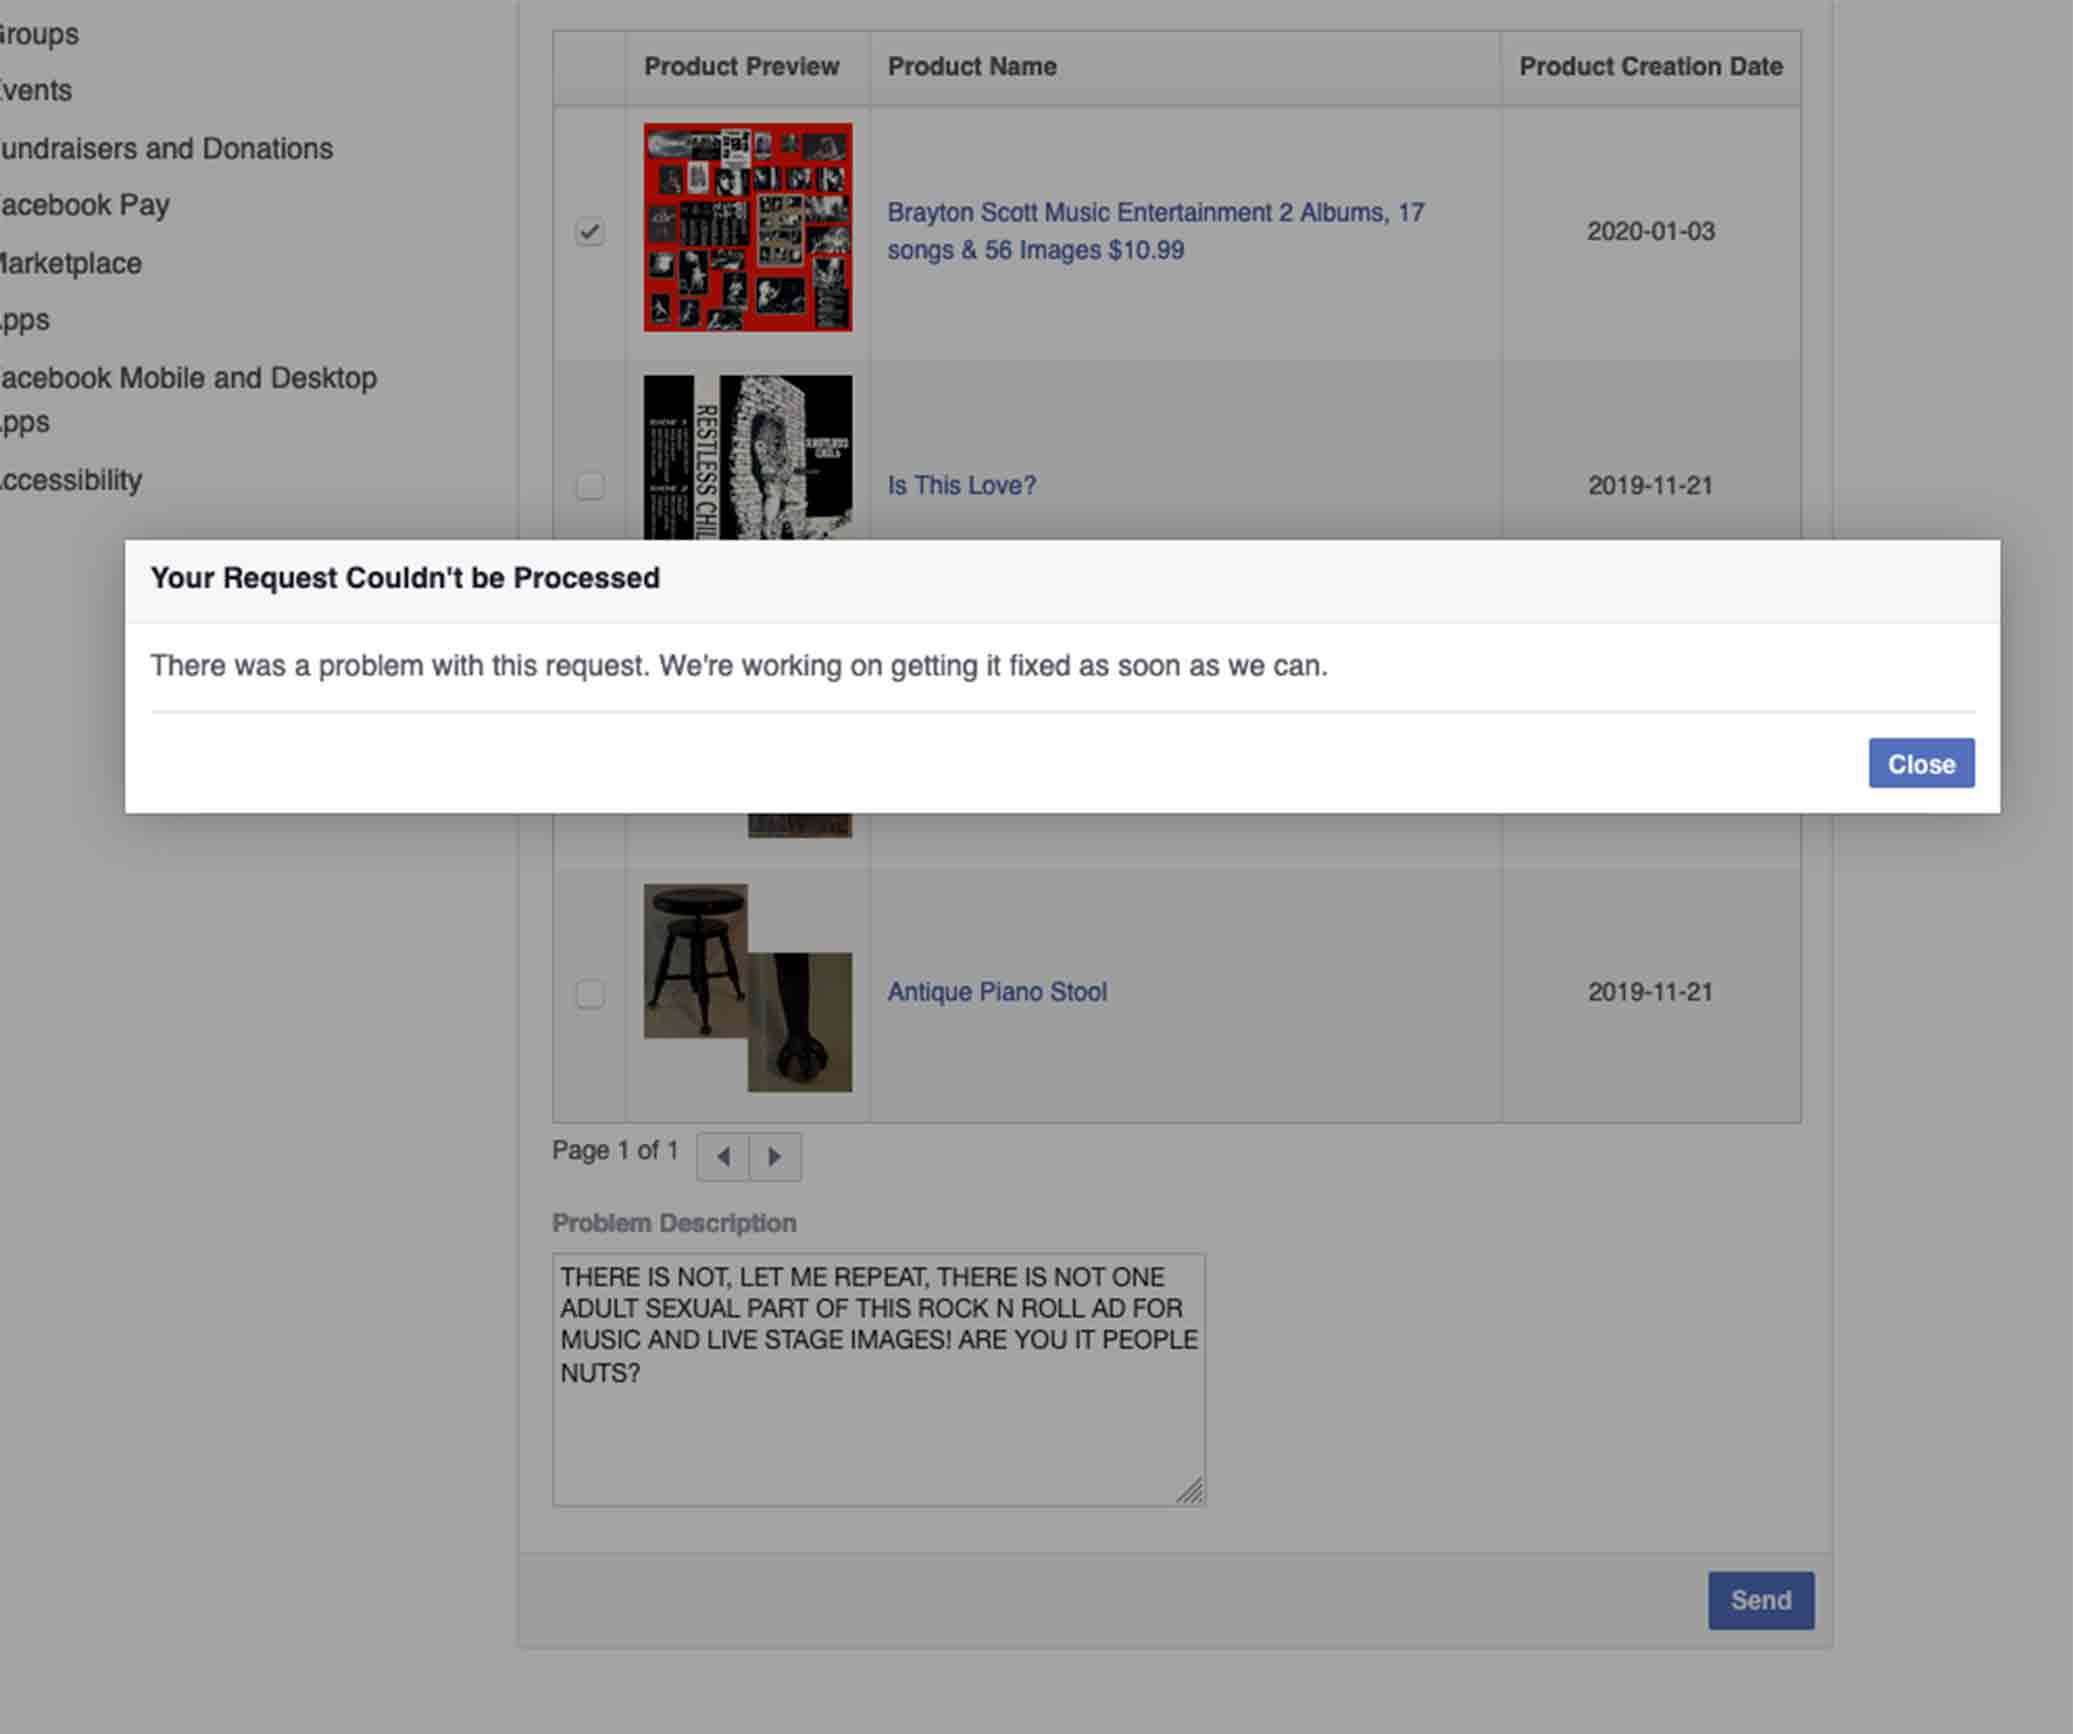 Image of Facebook Rebuttal Statement failure on BSME Album Images